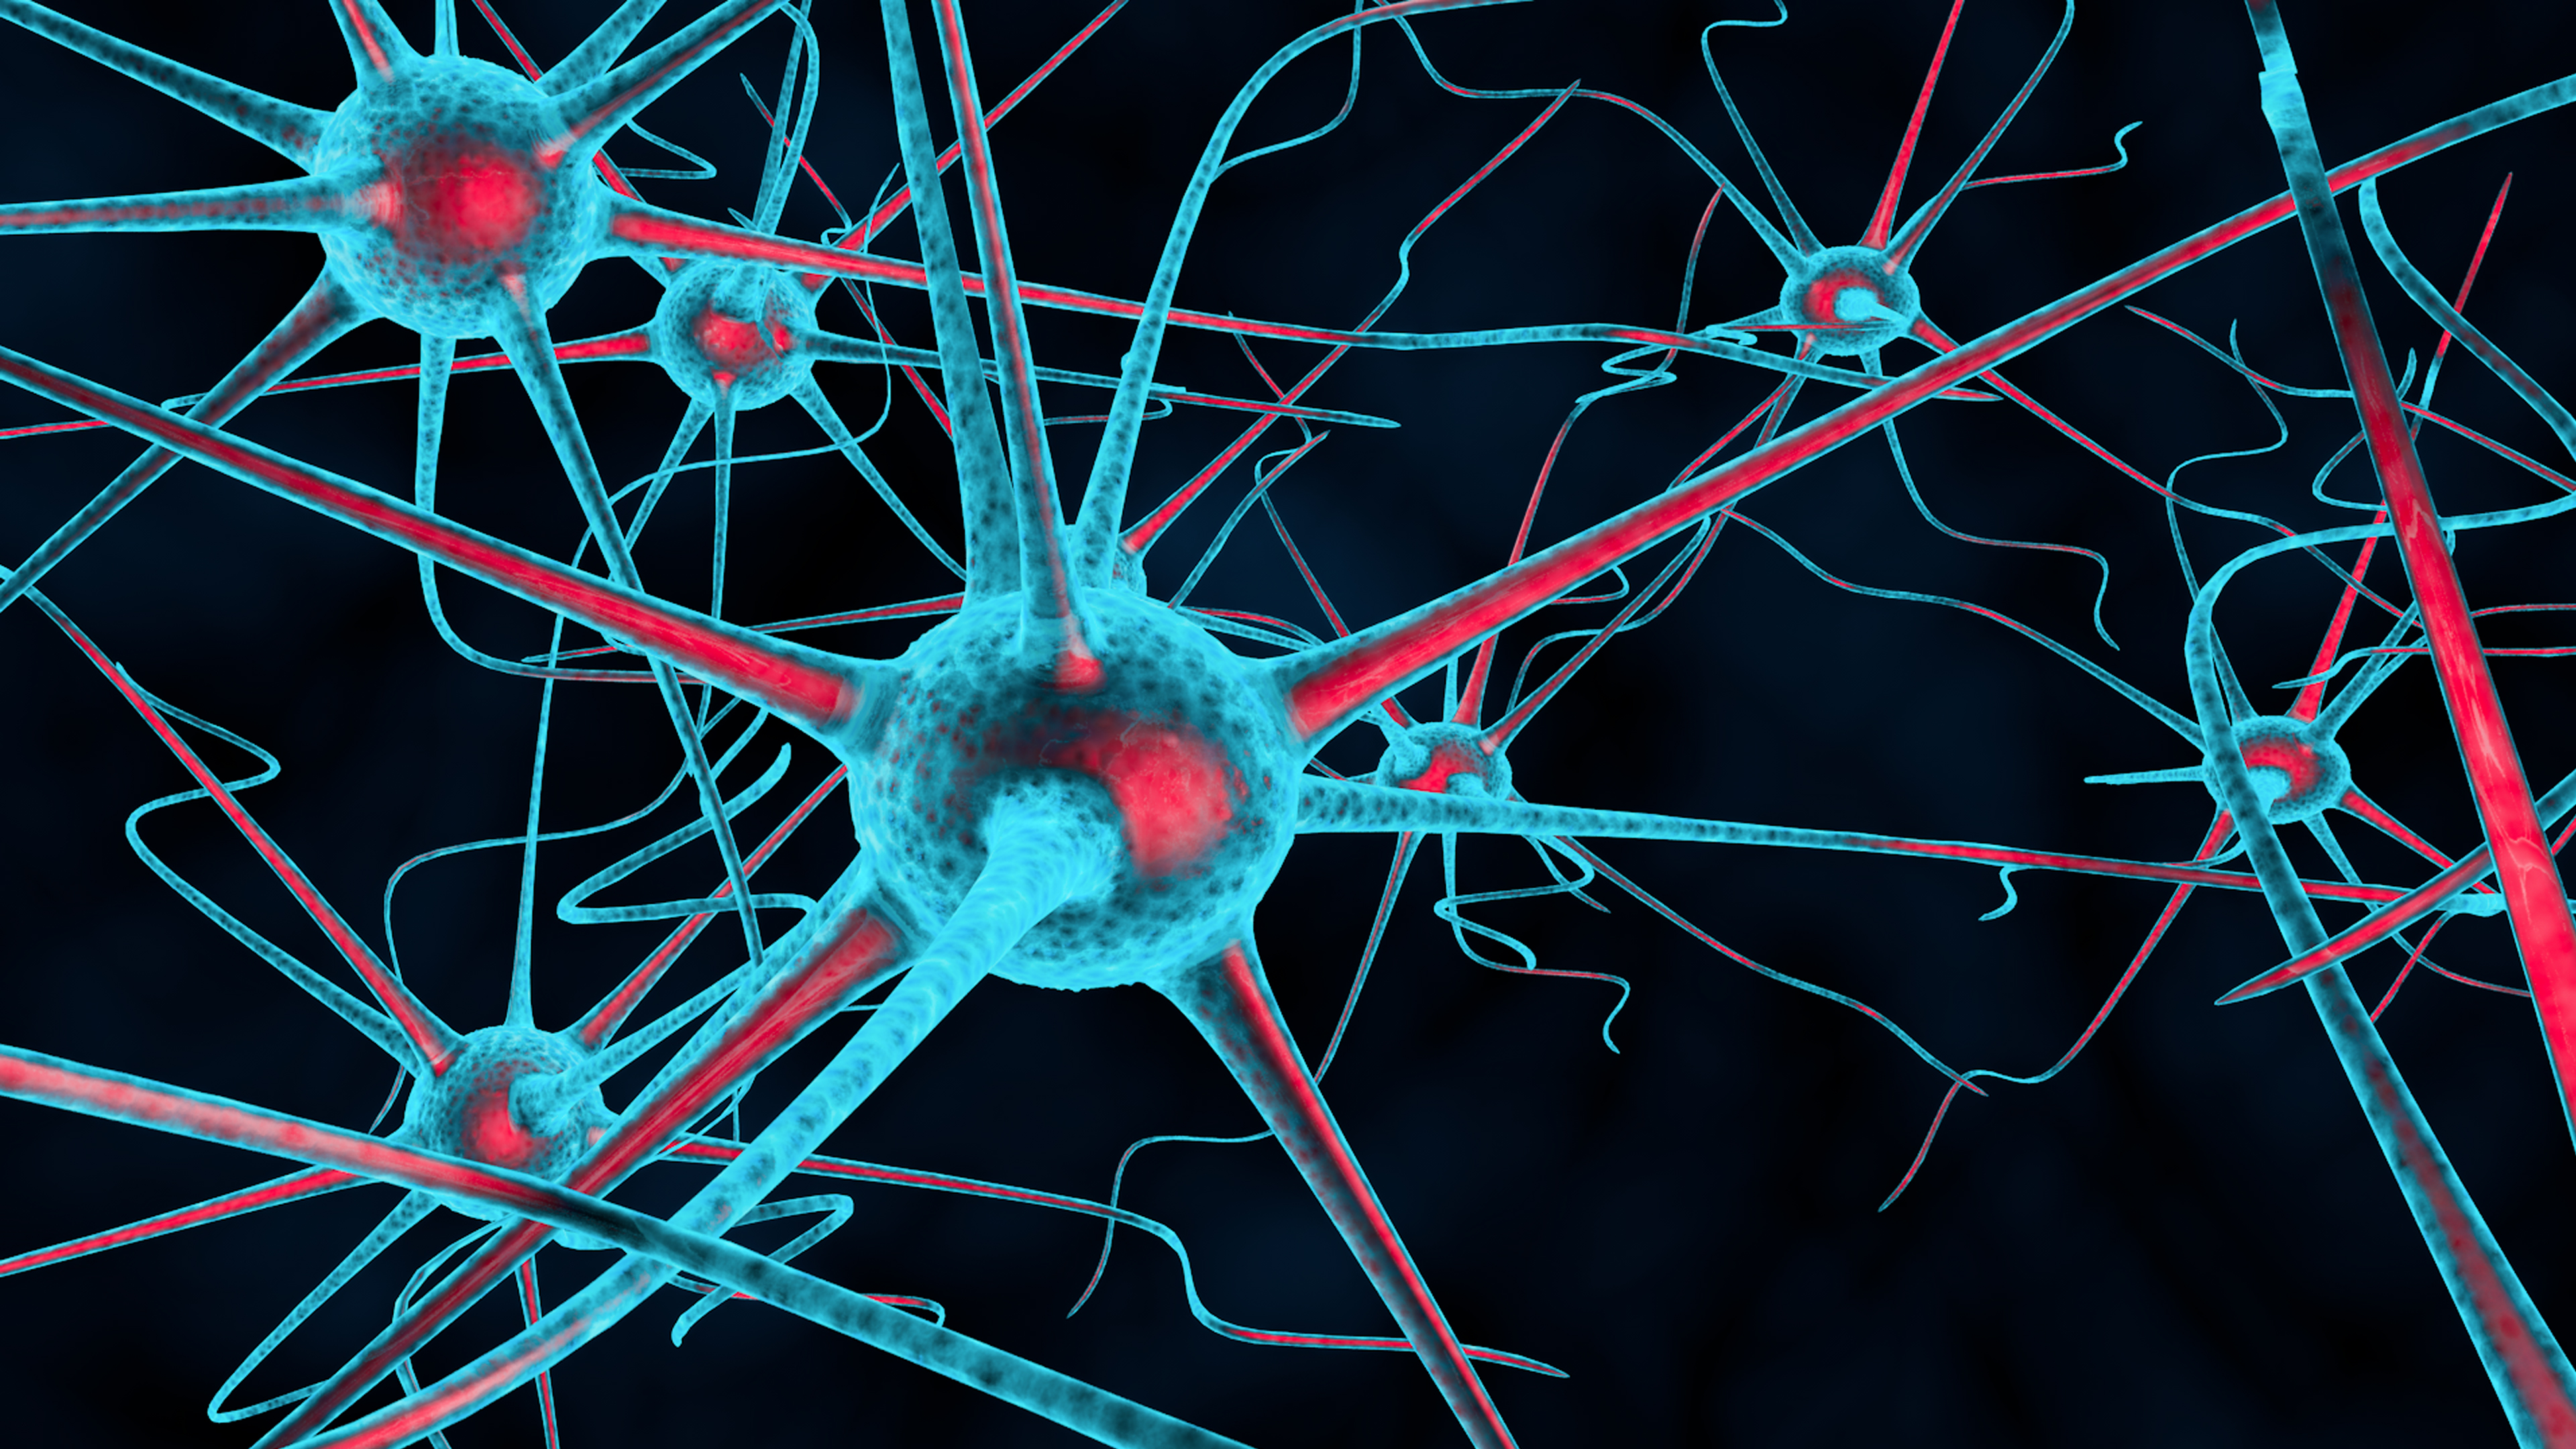 3D illustration of sensitized nerves